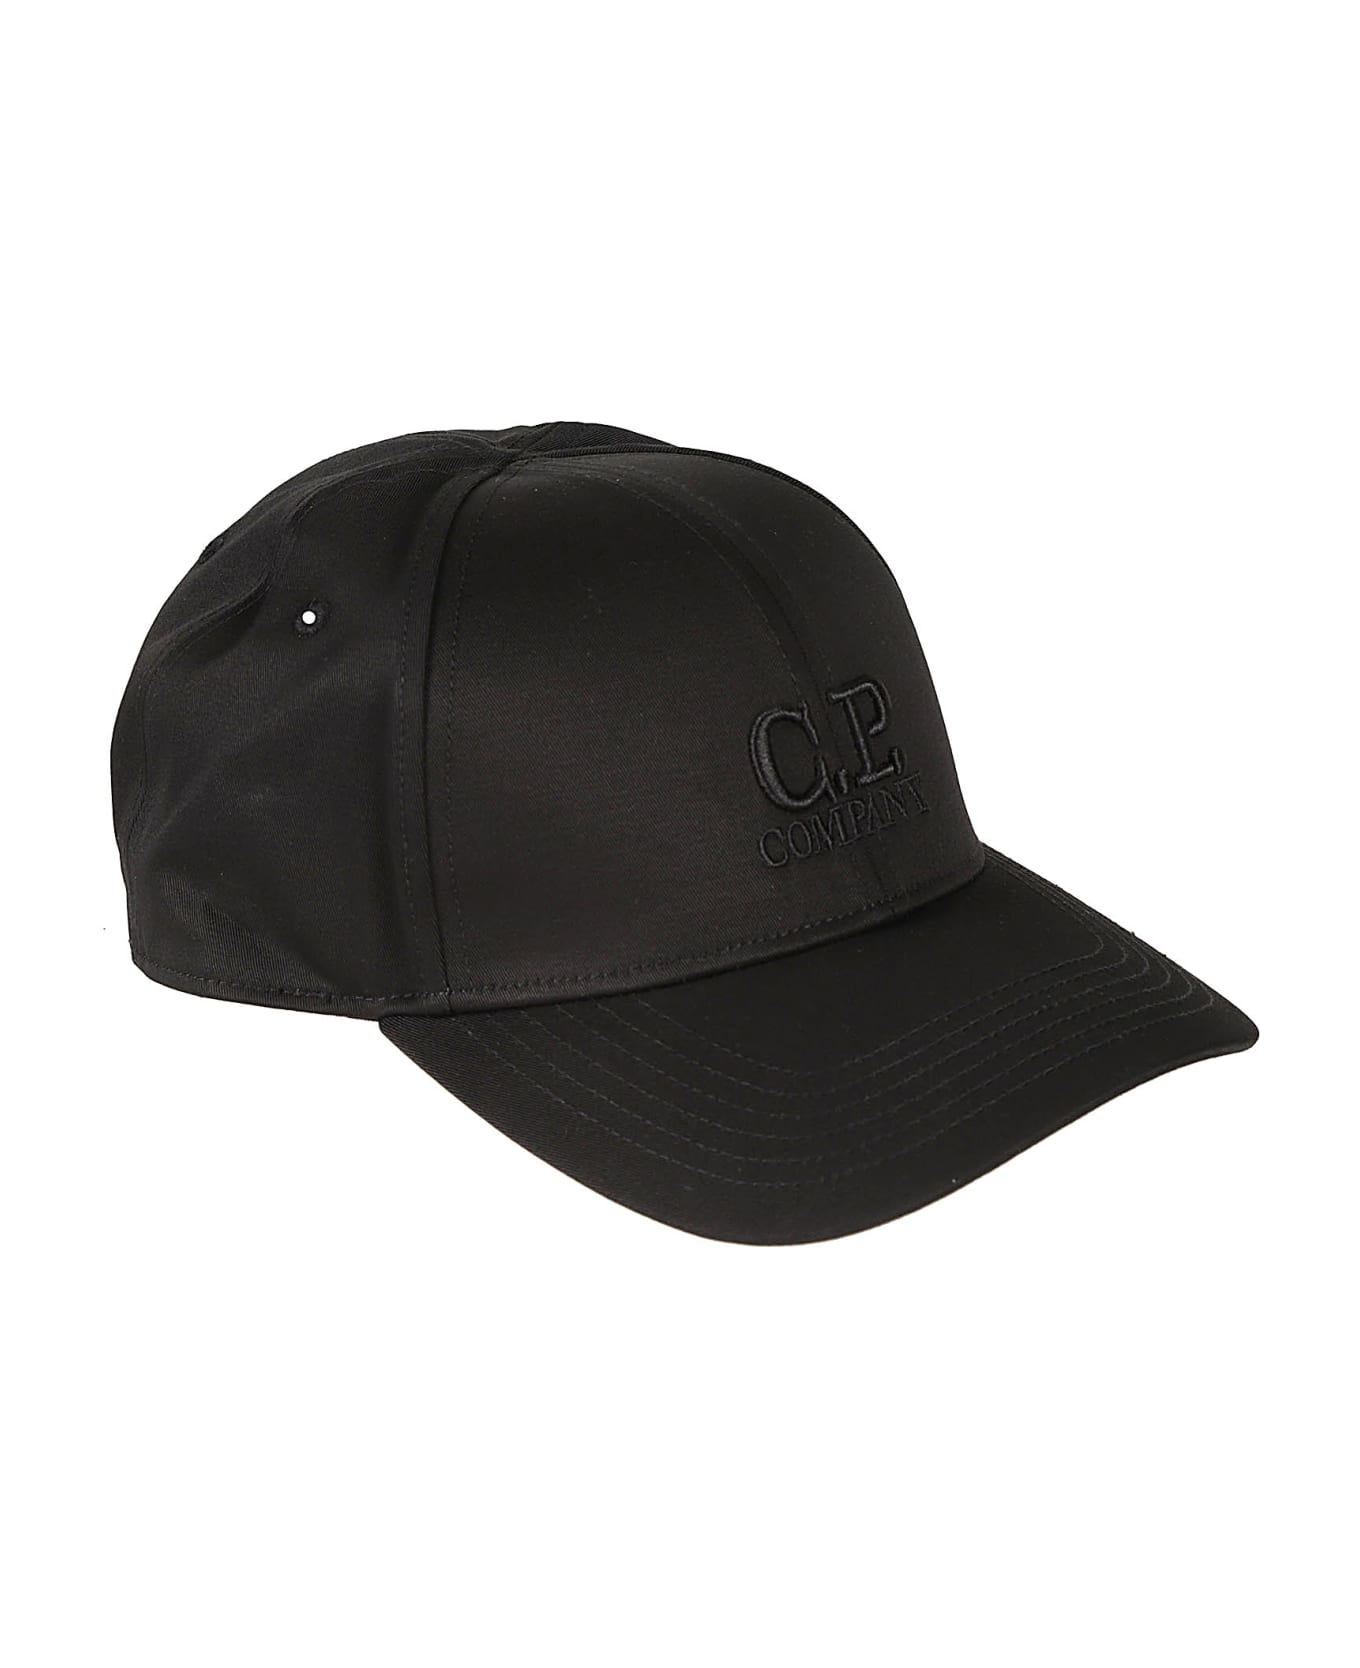 C.P. Company Gabardine Baseball Cap - Black